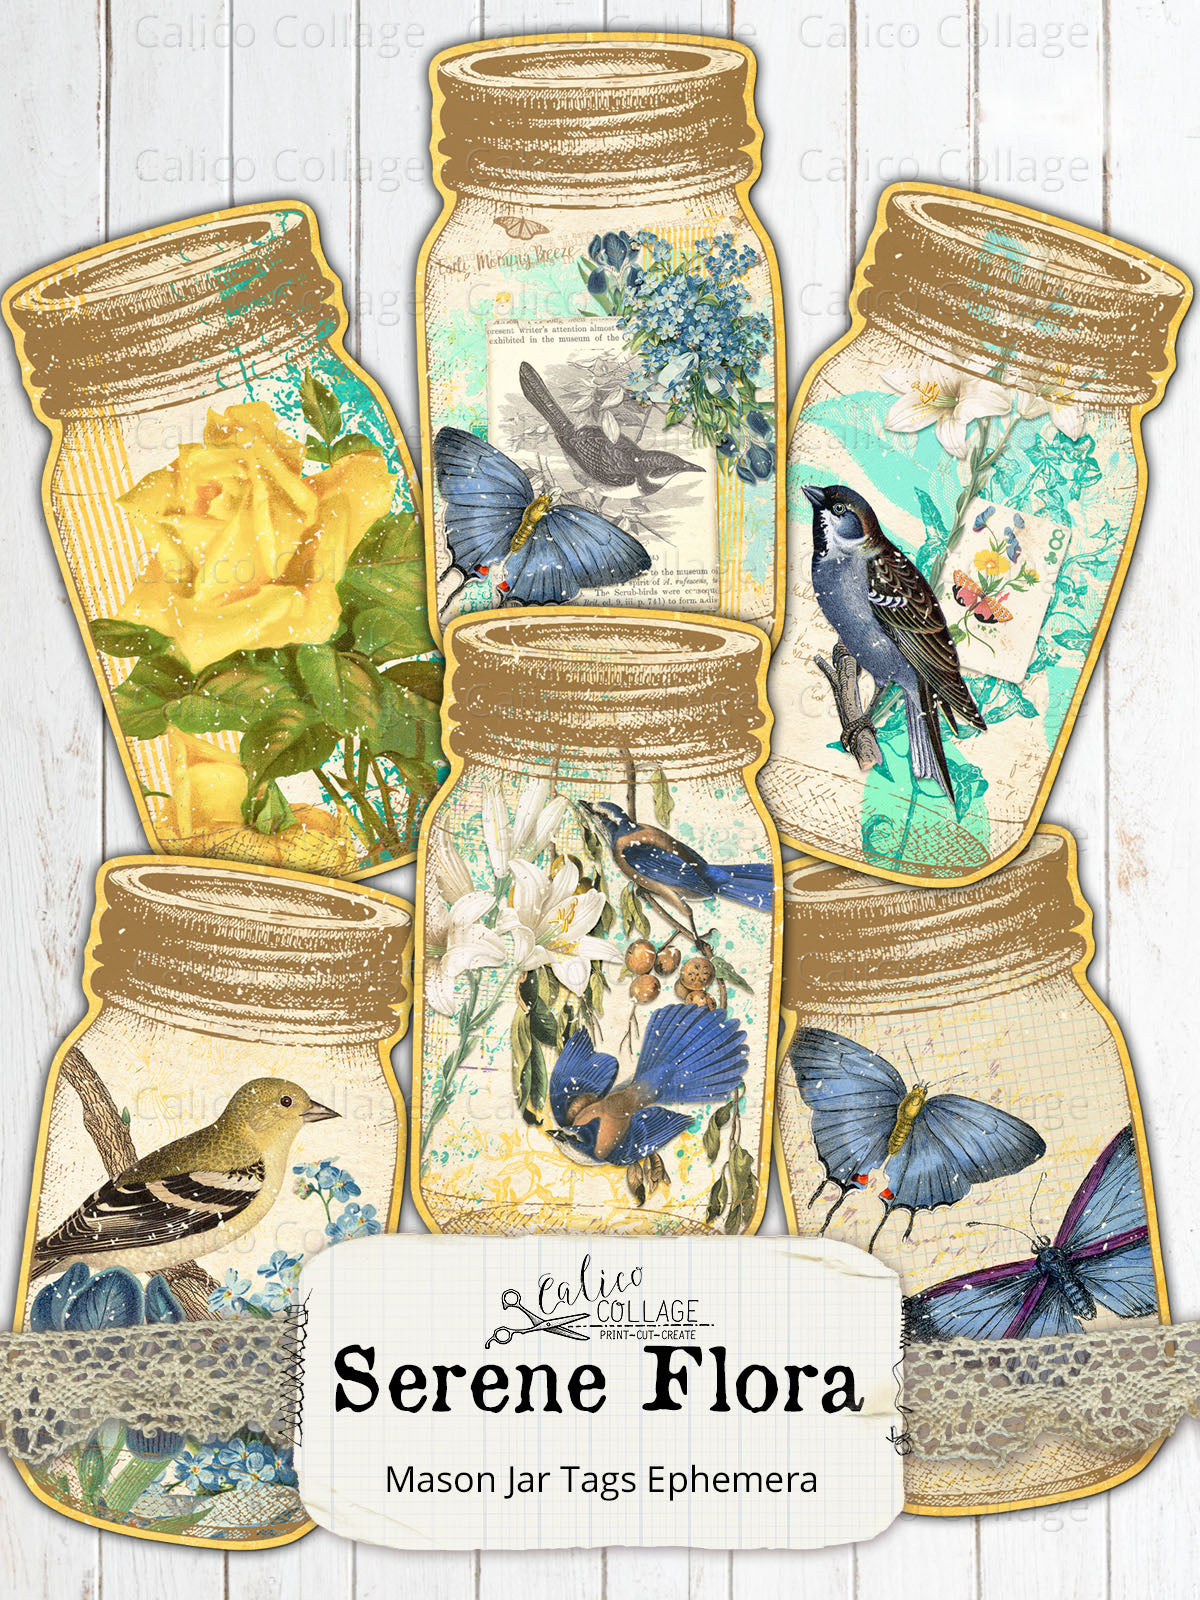 Serene Flora Mason Jar Tags